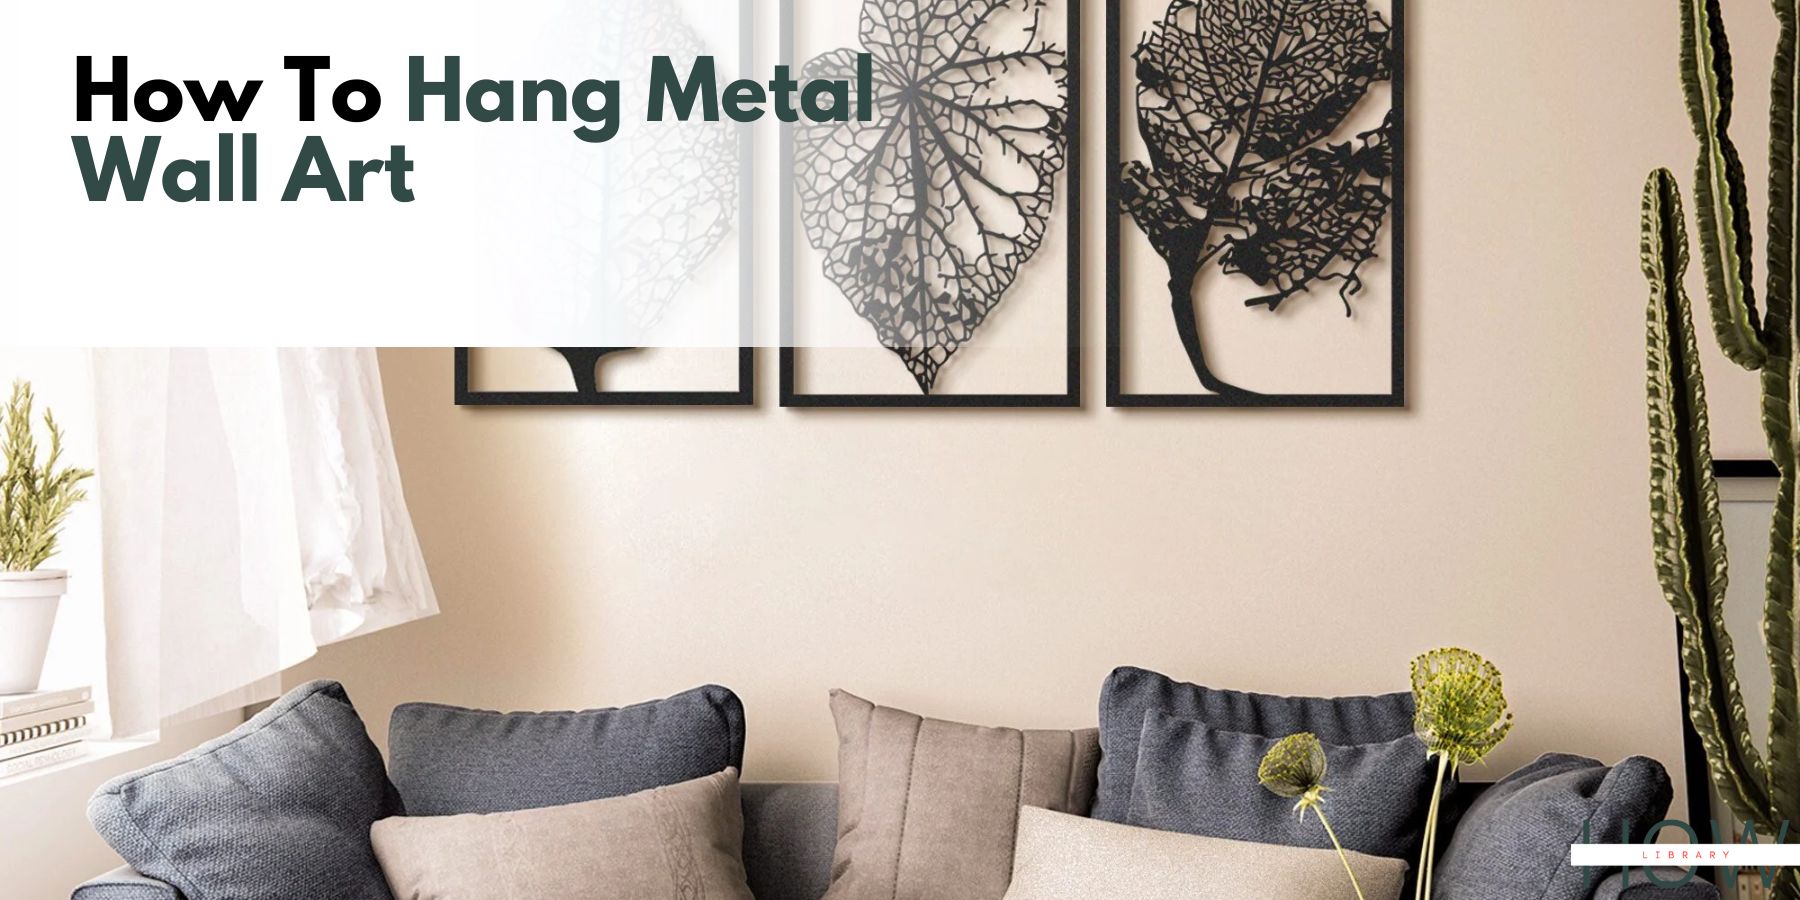 How To Hang Metal Wall Art